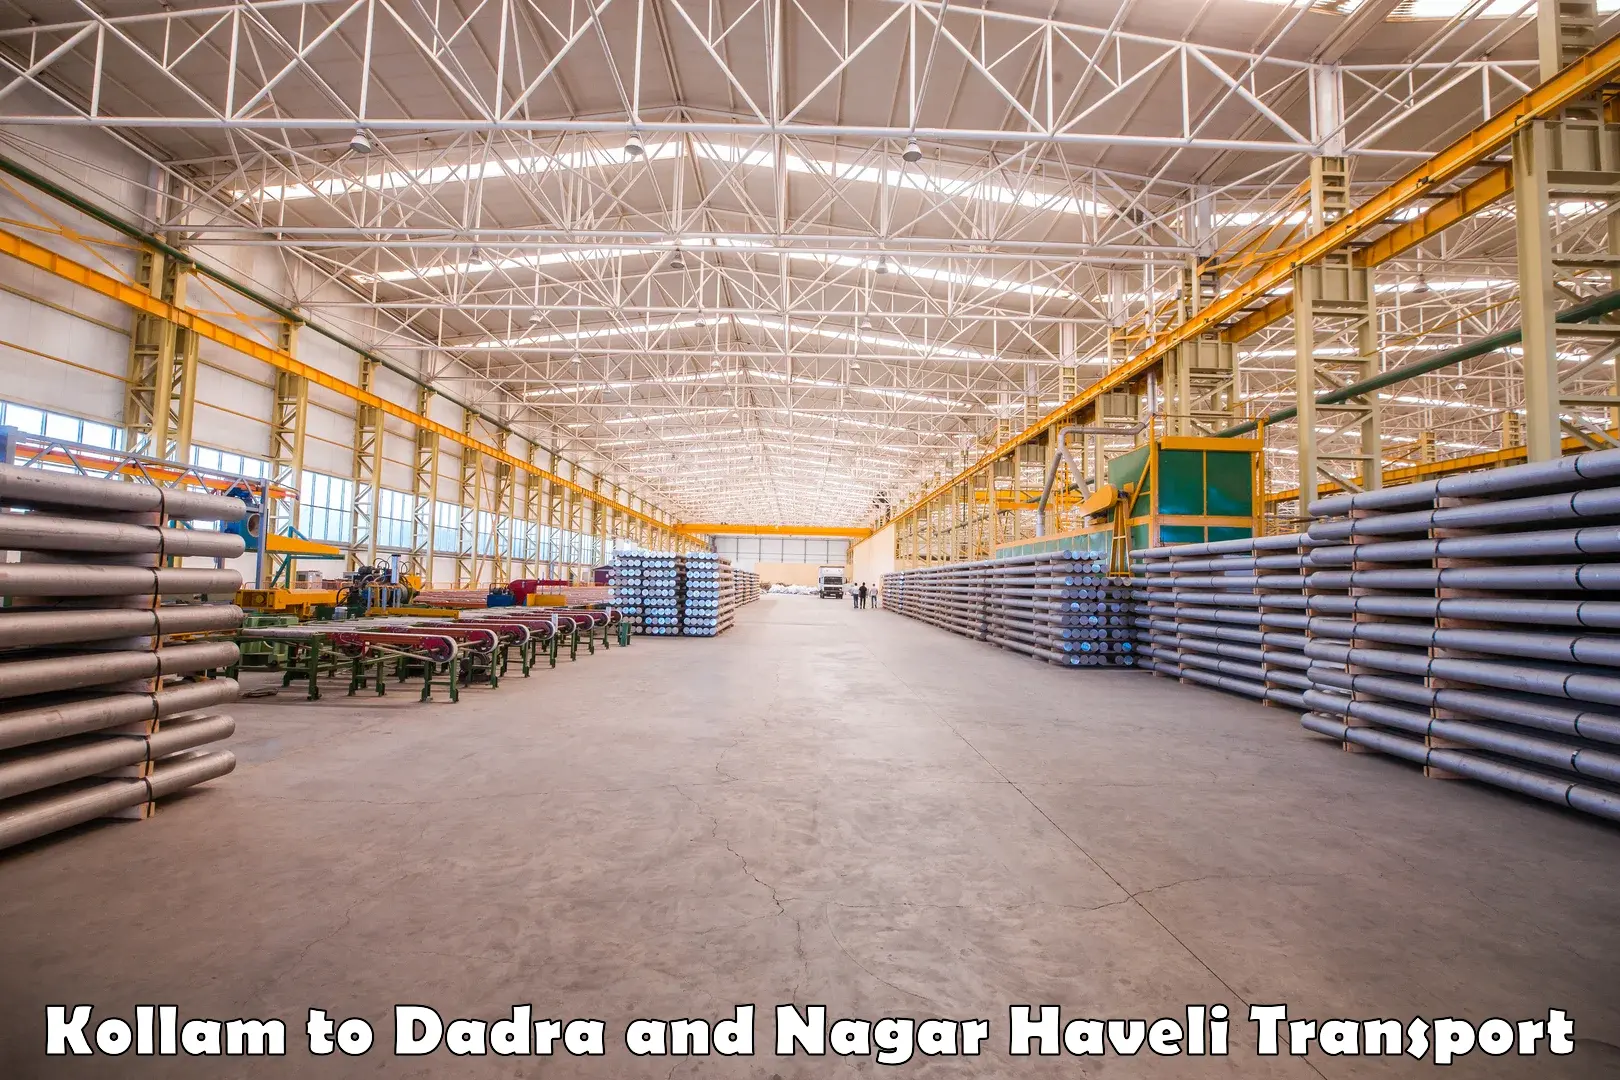 Truck transport companies in India Kollam to Dadra and Nagar Haveli